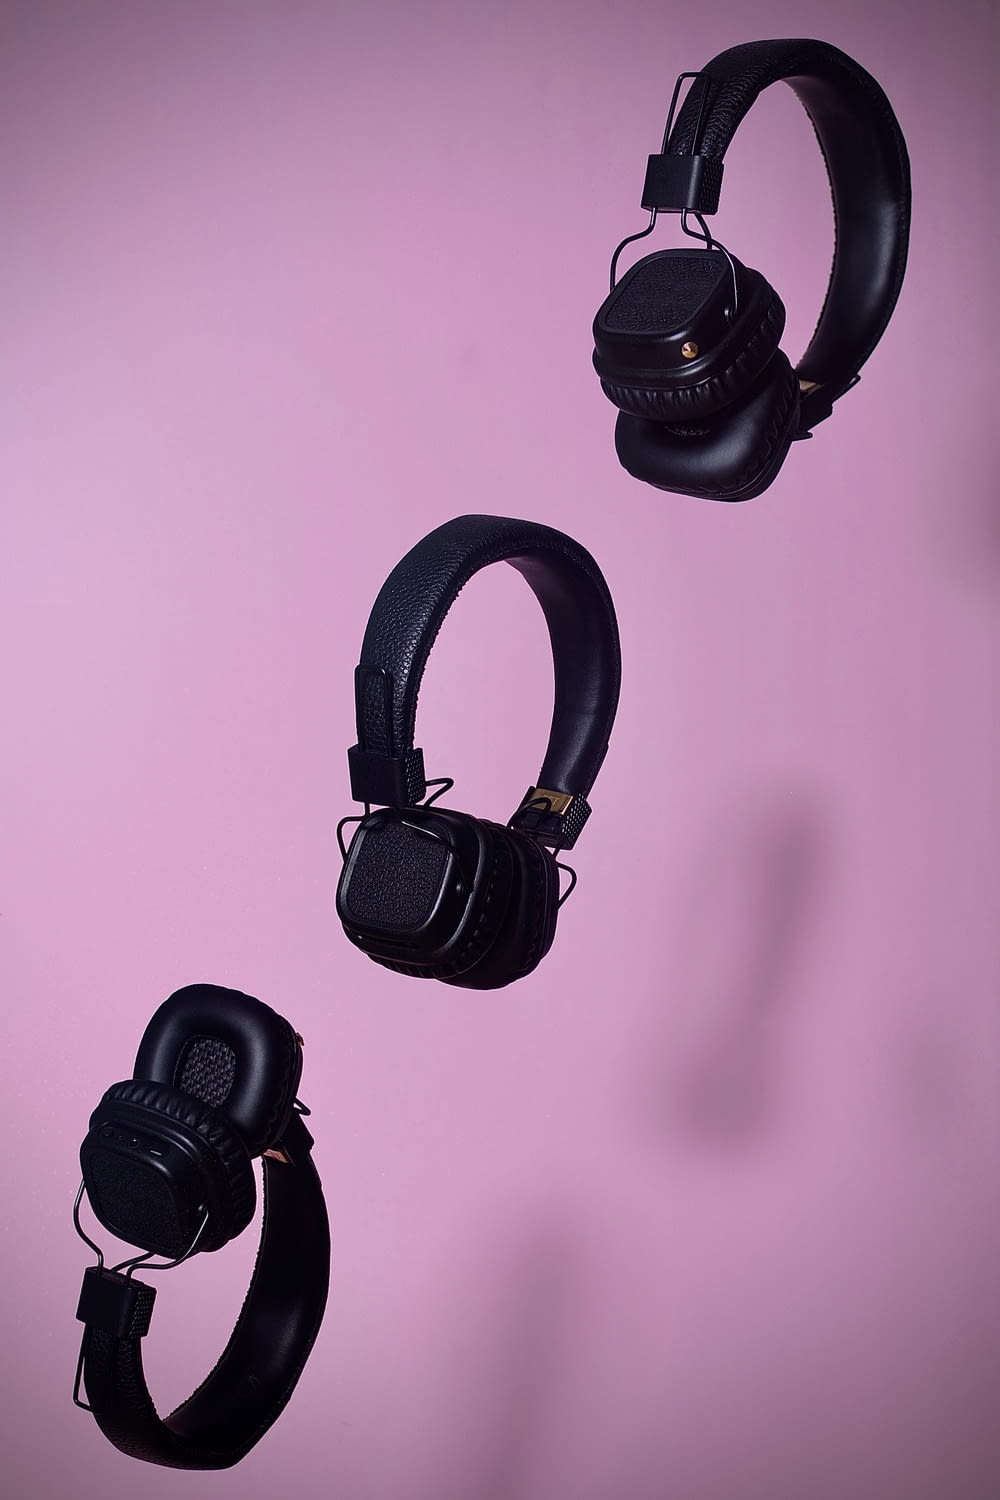 three black cordless headphones